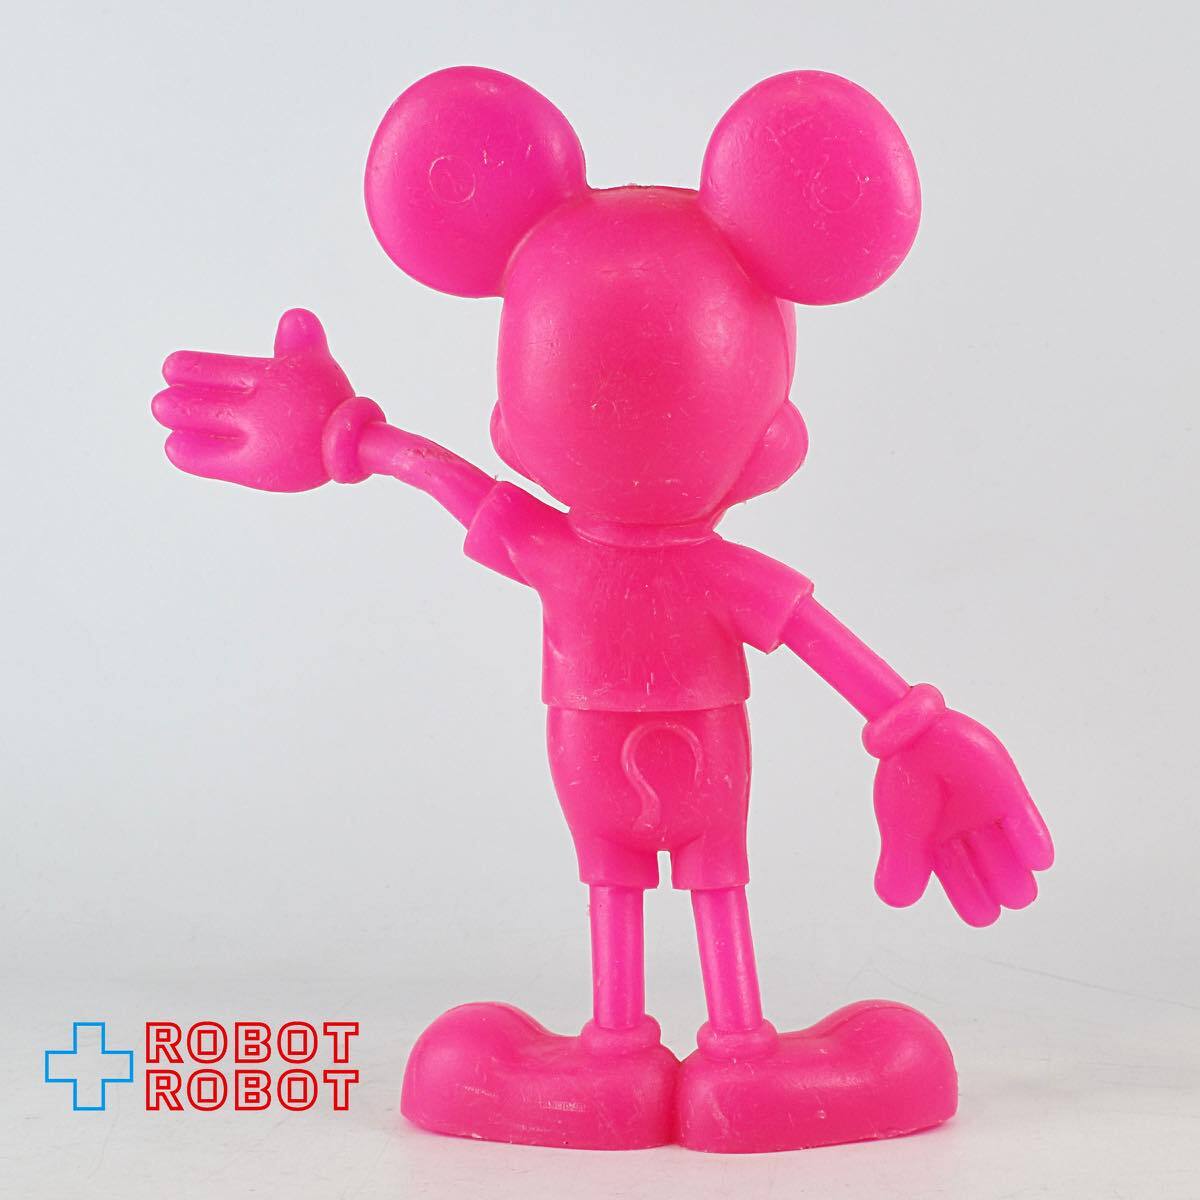 Marx ディズニー ミッキーマウス プラスチック フィギュア ピンク